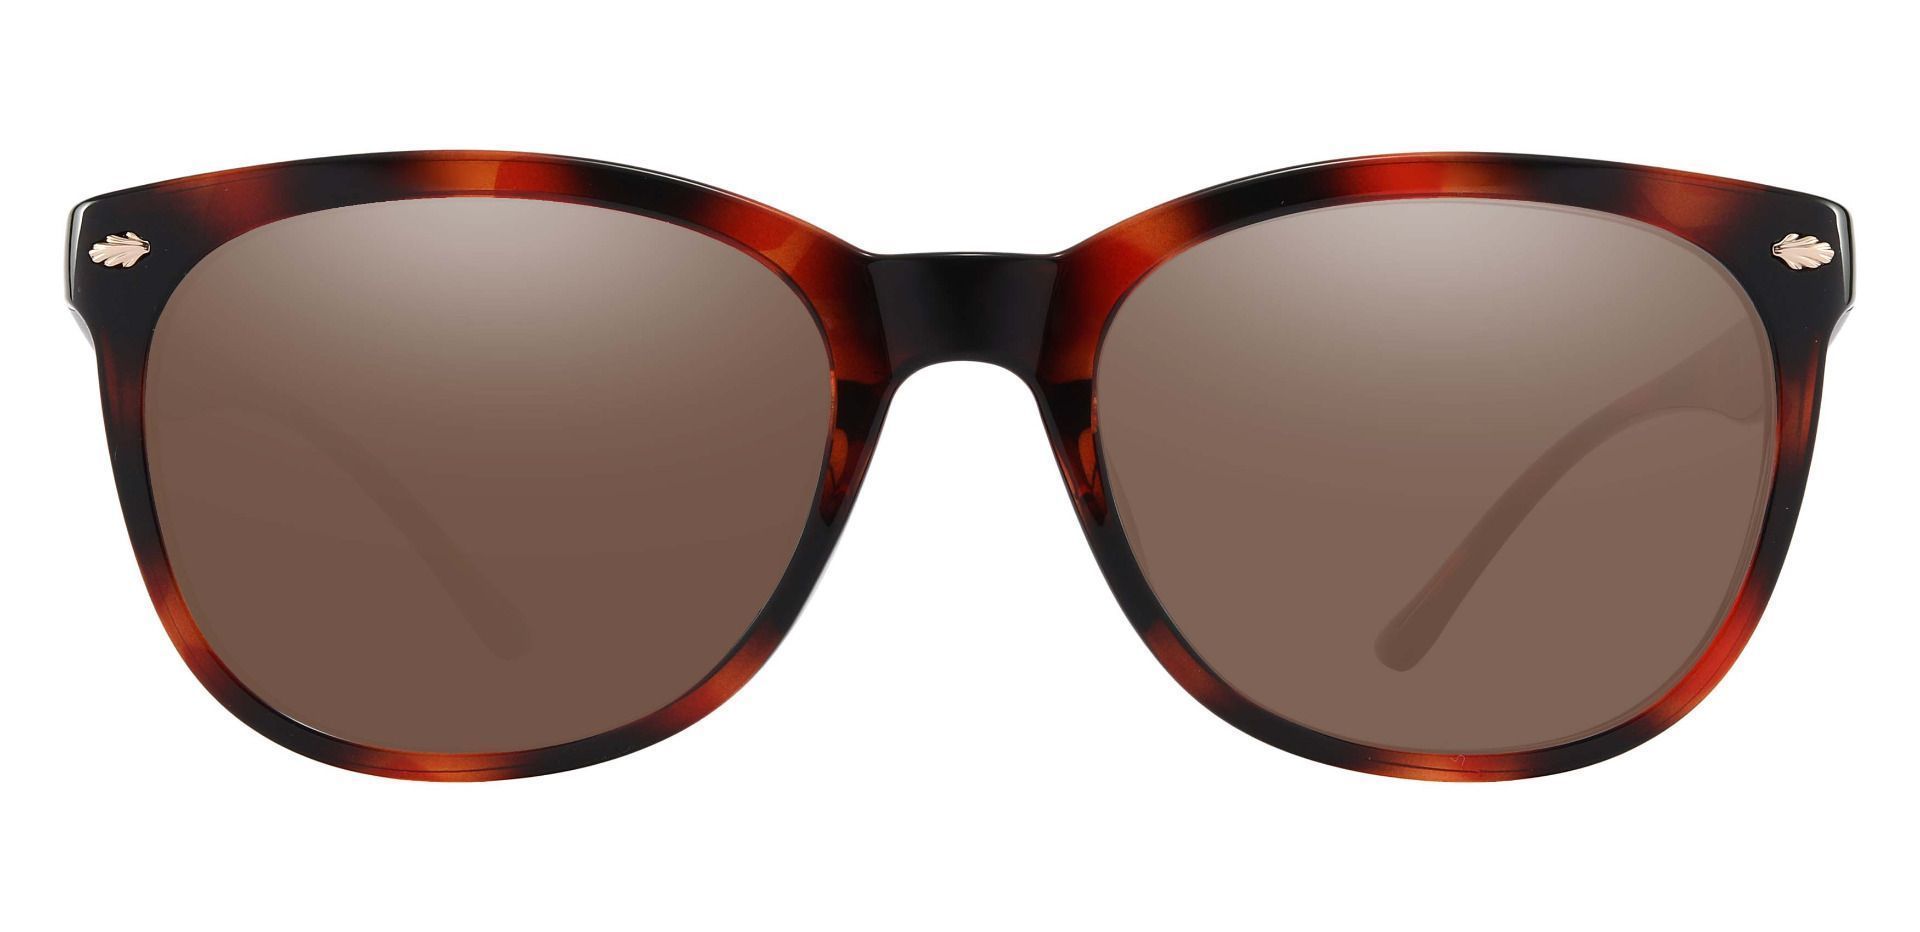 Pavilion Square Reading Sunglasses - Tortoise Frame With Brown Lenses